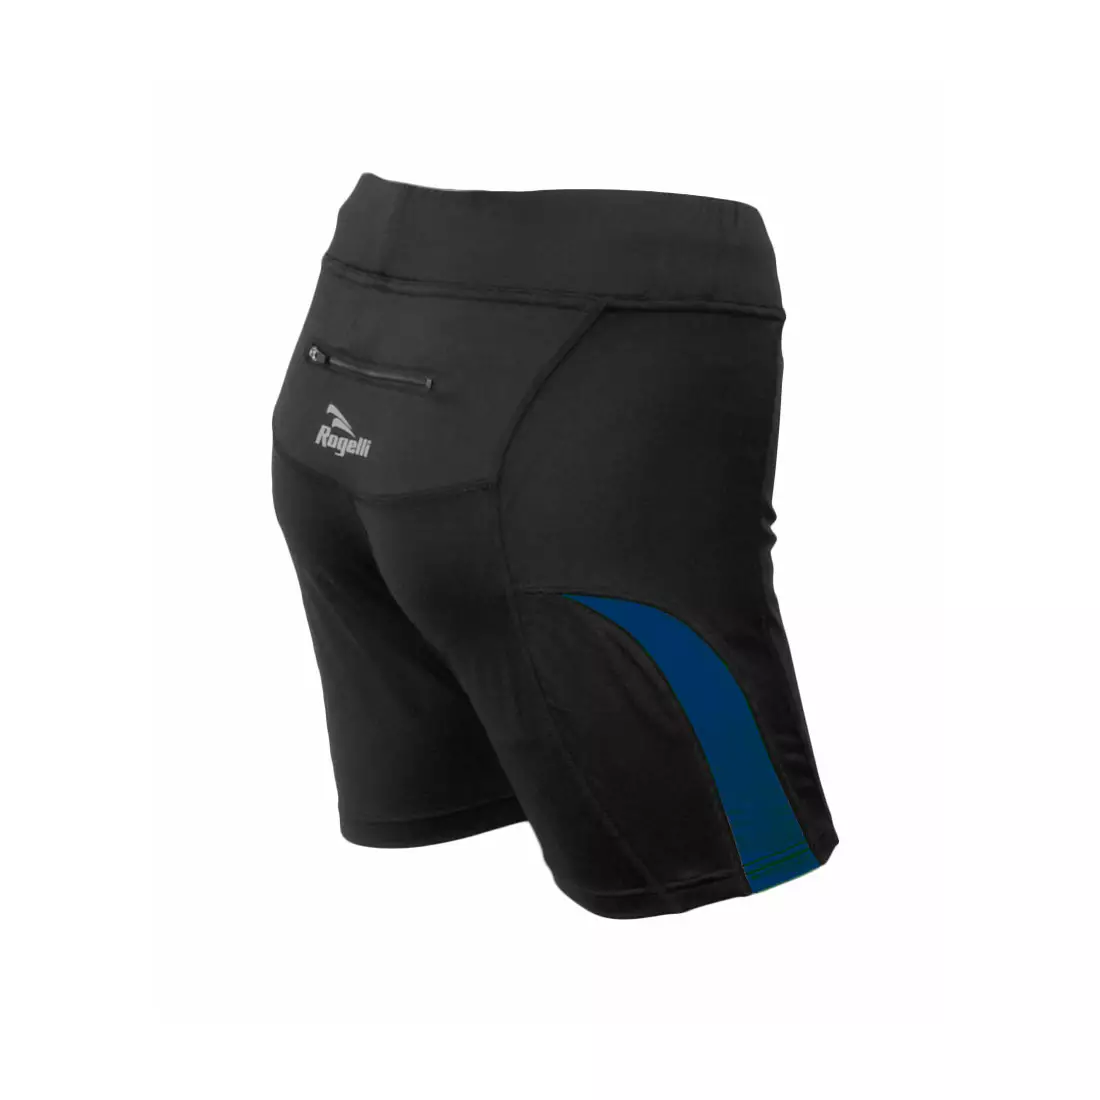 ROGELLI  RUN  EDIA - women's sports shorts, color: Black and blue